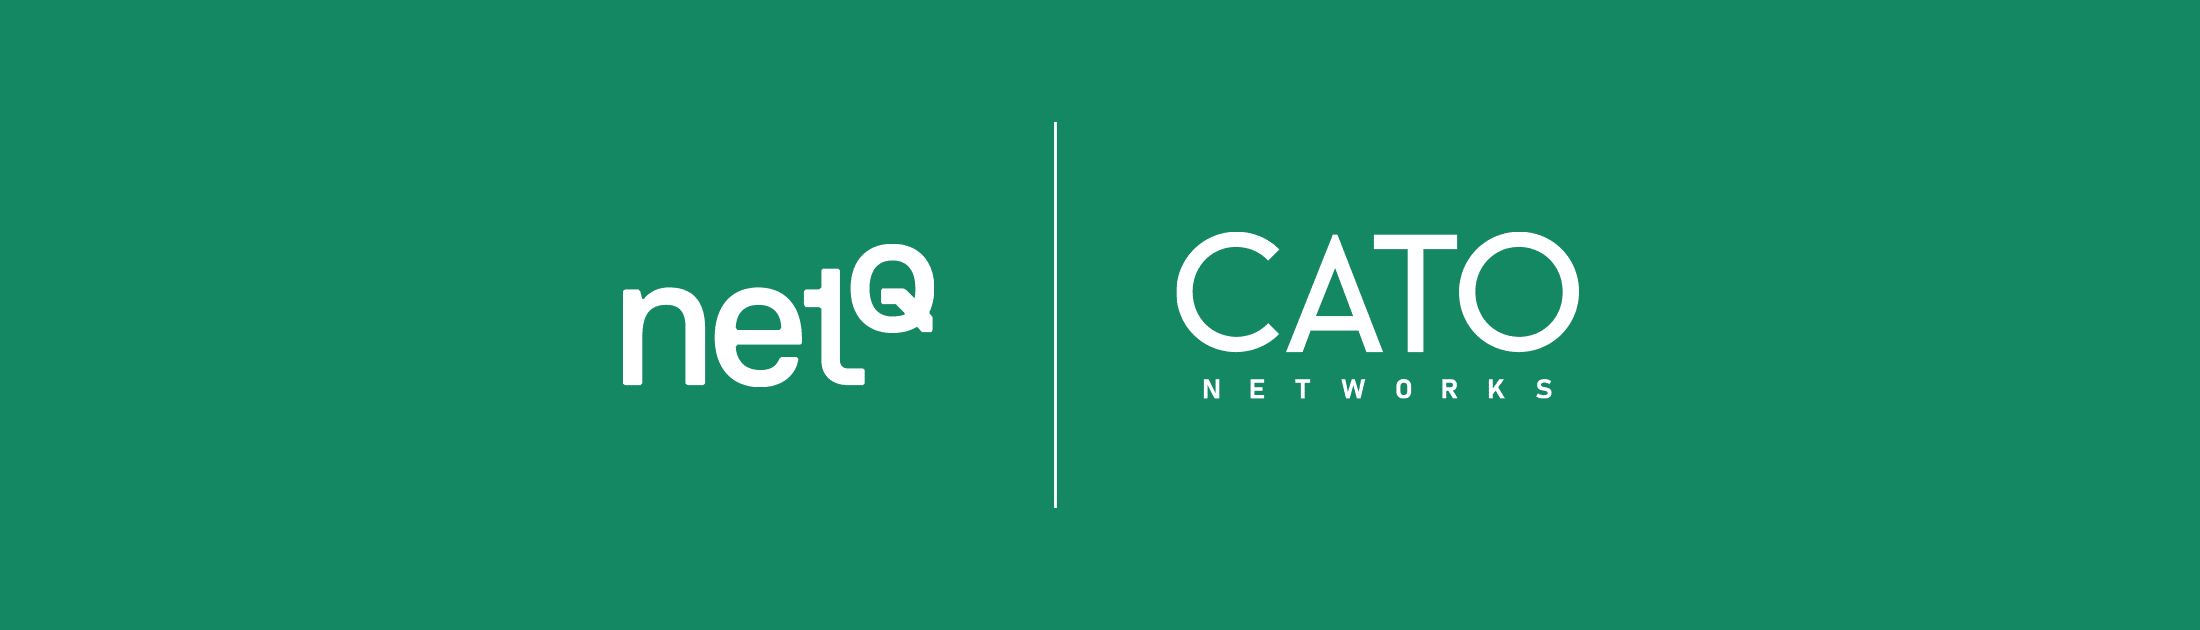 netQ | Cato Networks